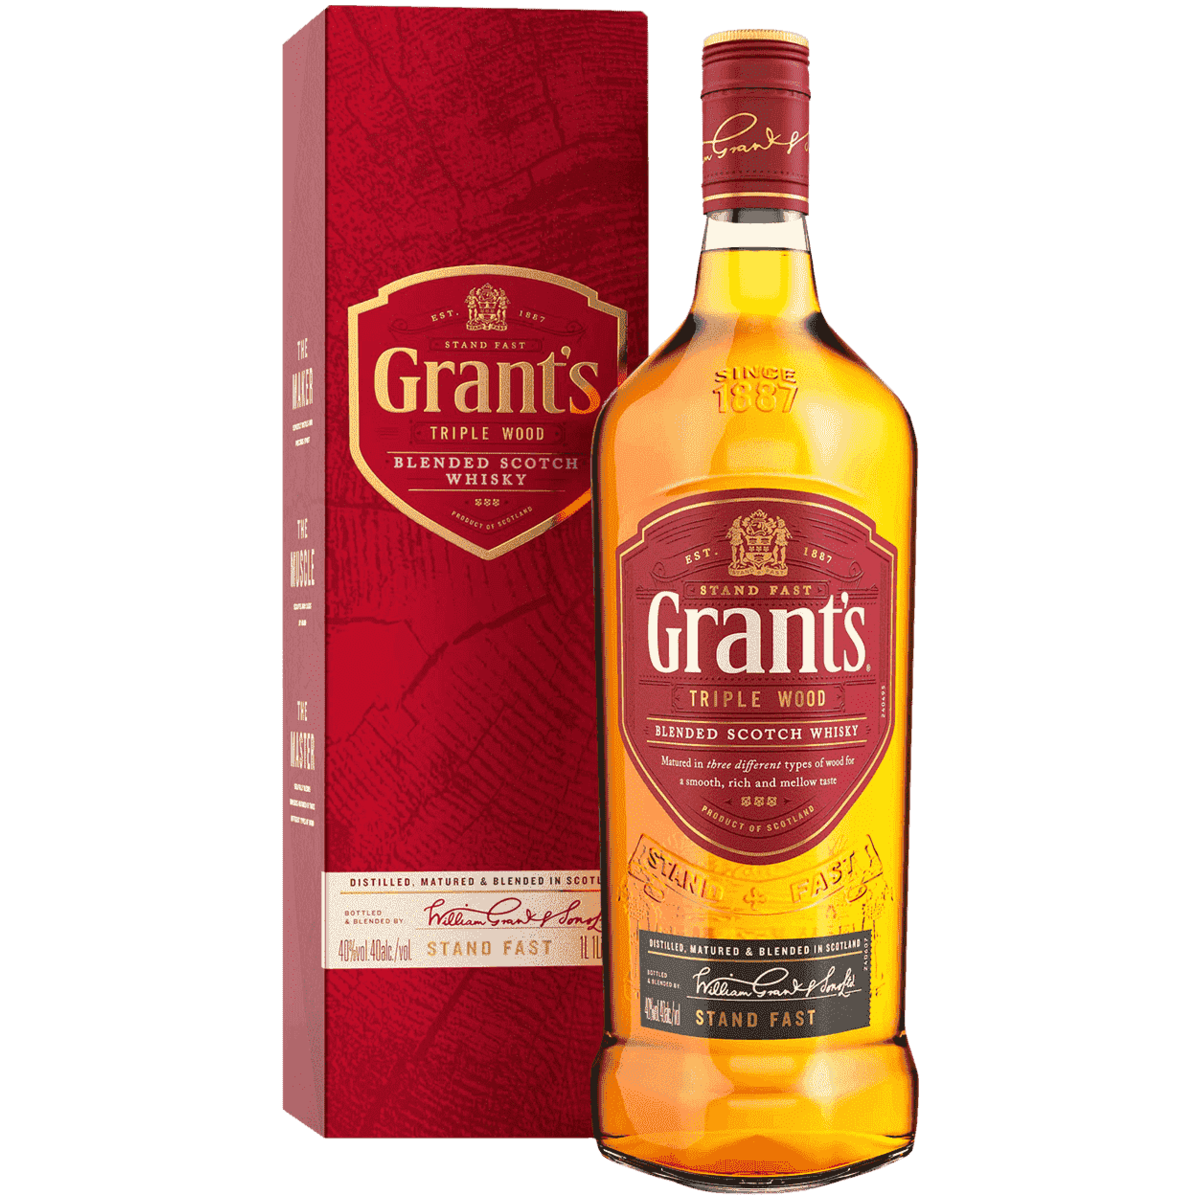 Grants 0.7 цена. Грантс 8 лет 0.7. Виски Грантс Шерри Каск 0.7. Виски Грантс трипл Вуд. Grants 0.7 Blended Scotch Whisky.